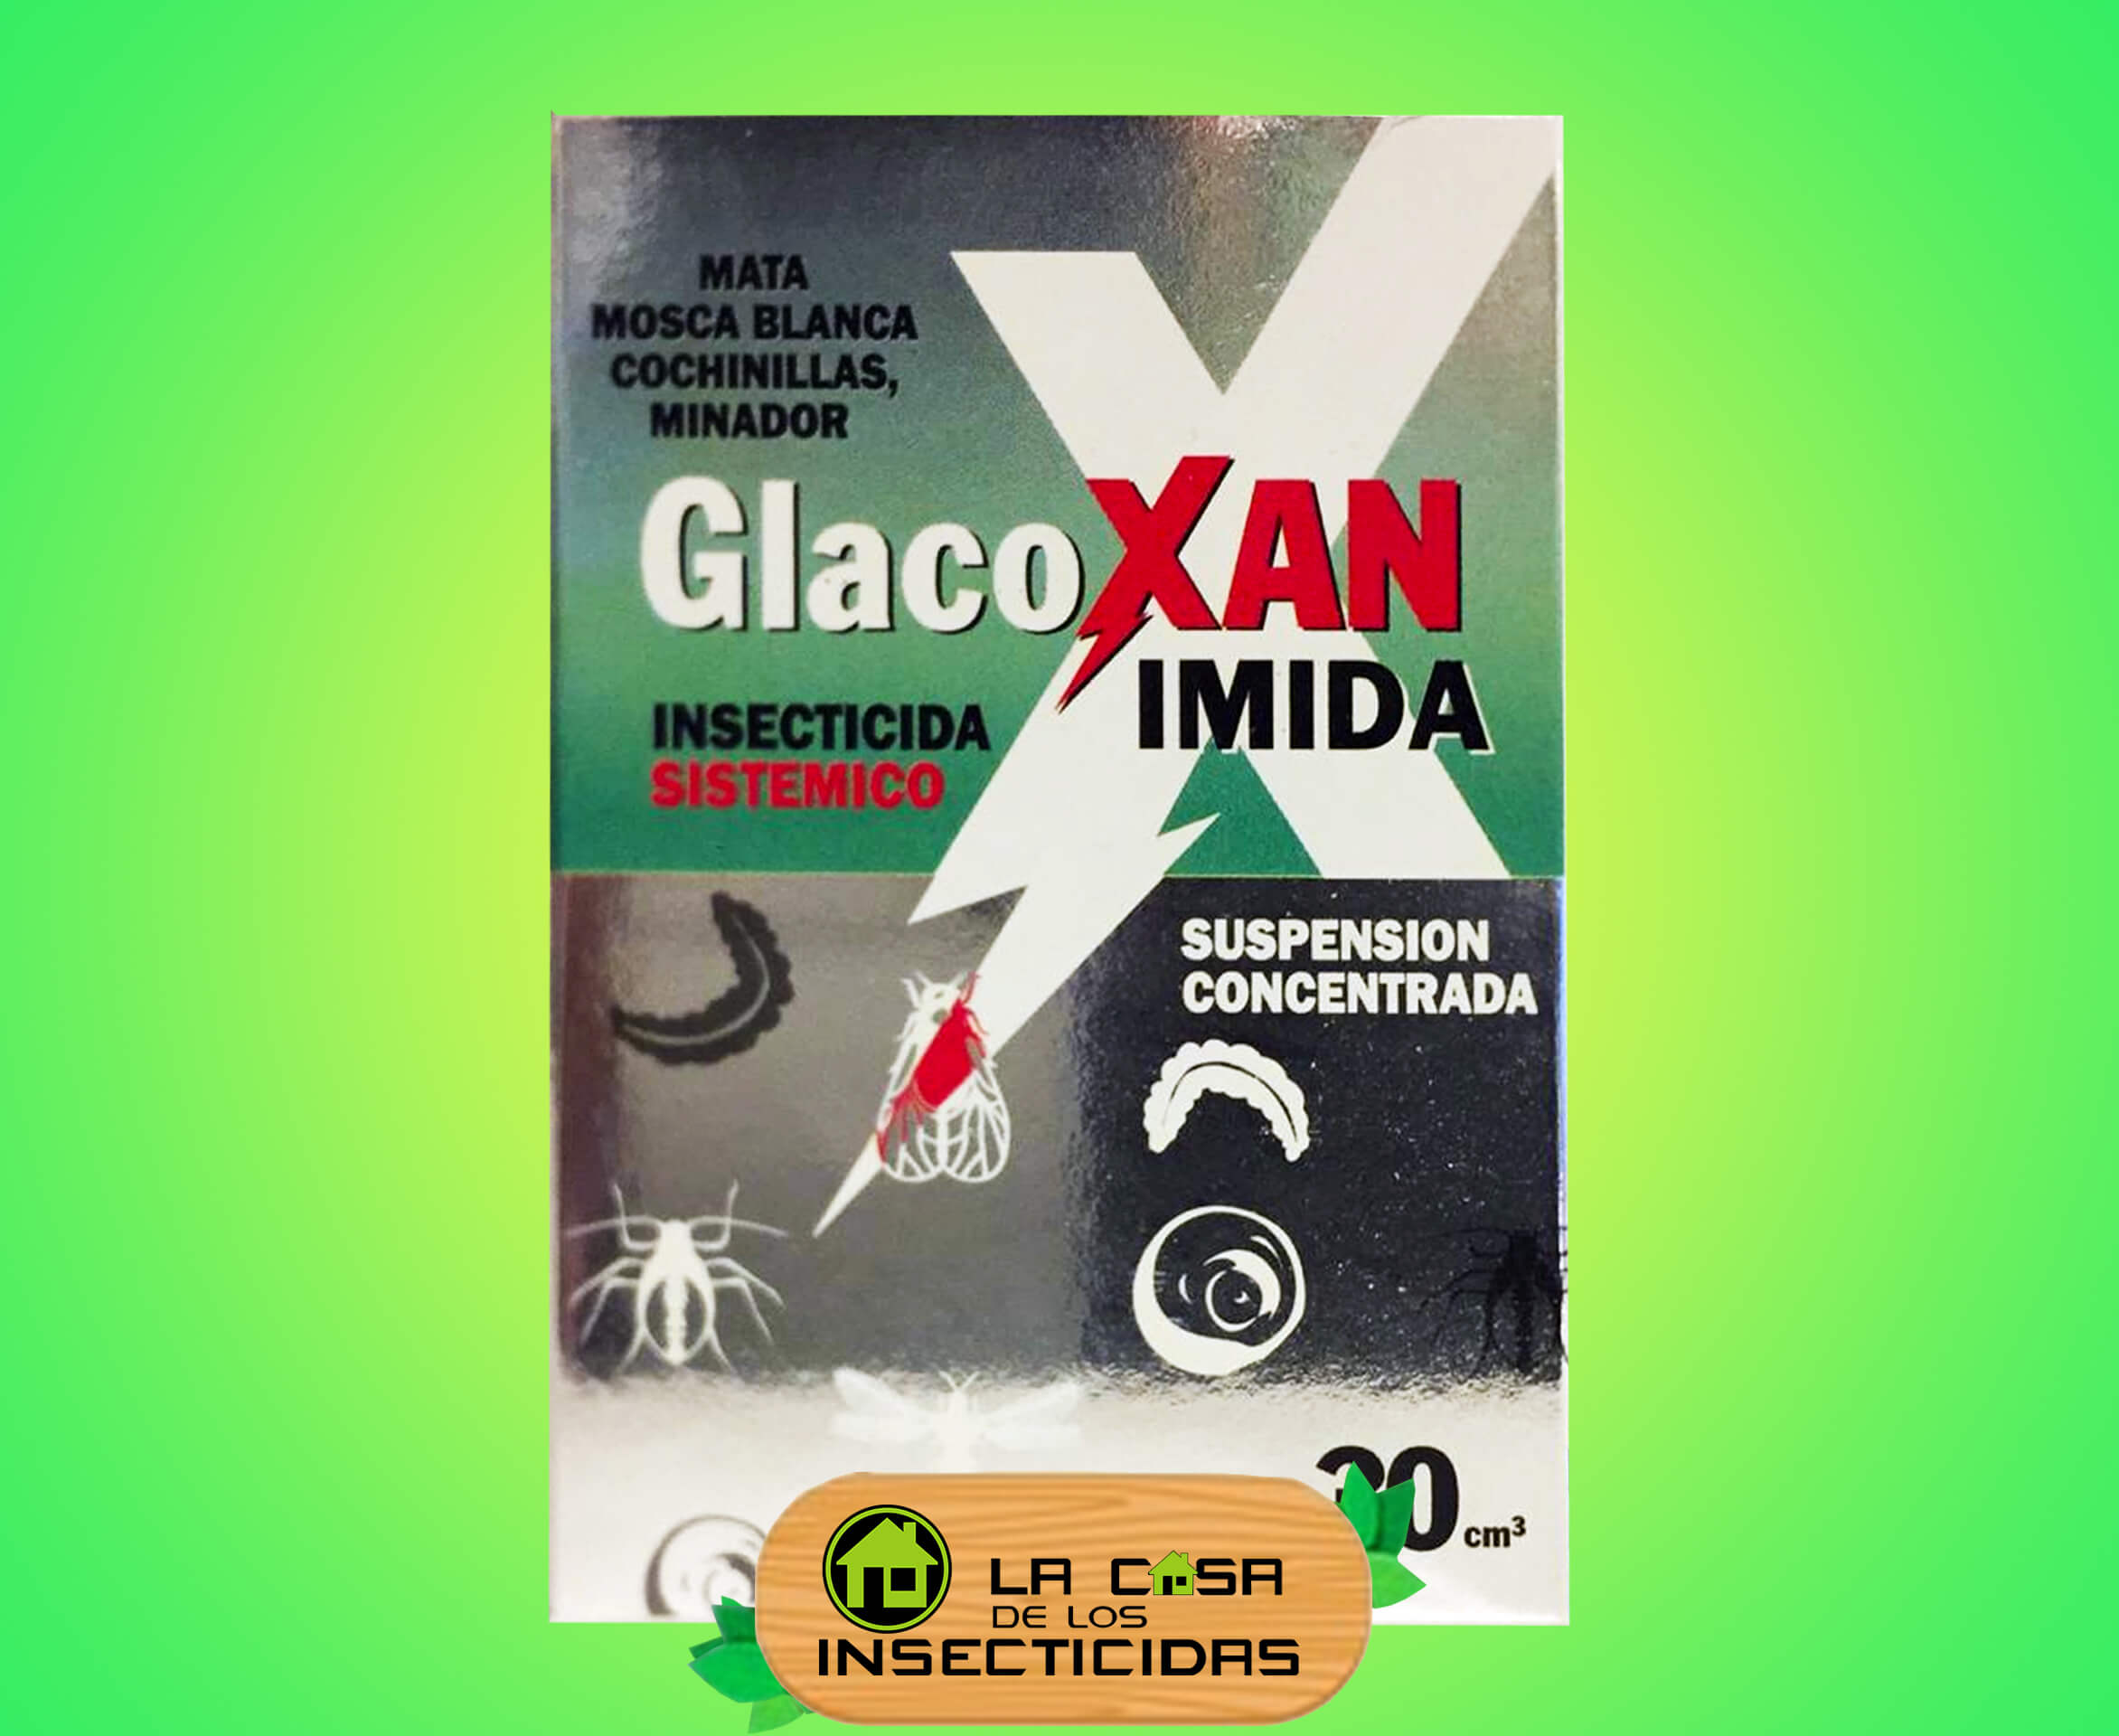 Glacoxan Imida Insecticida sistémico.